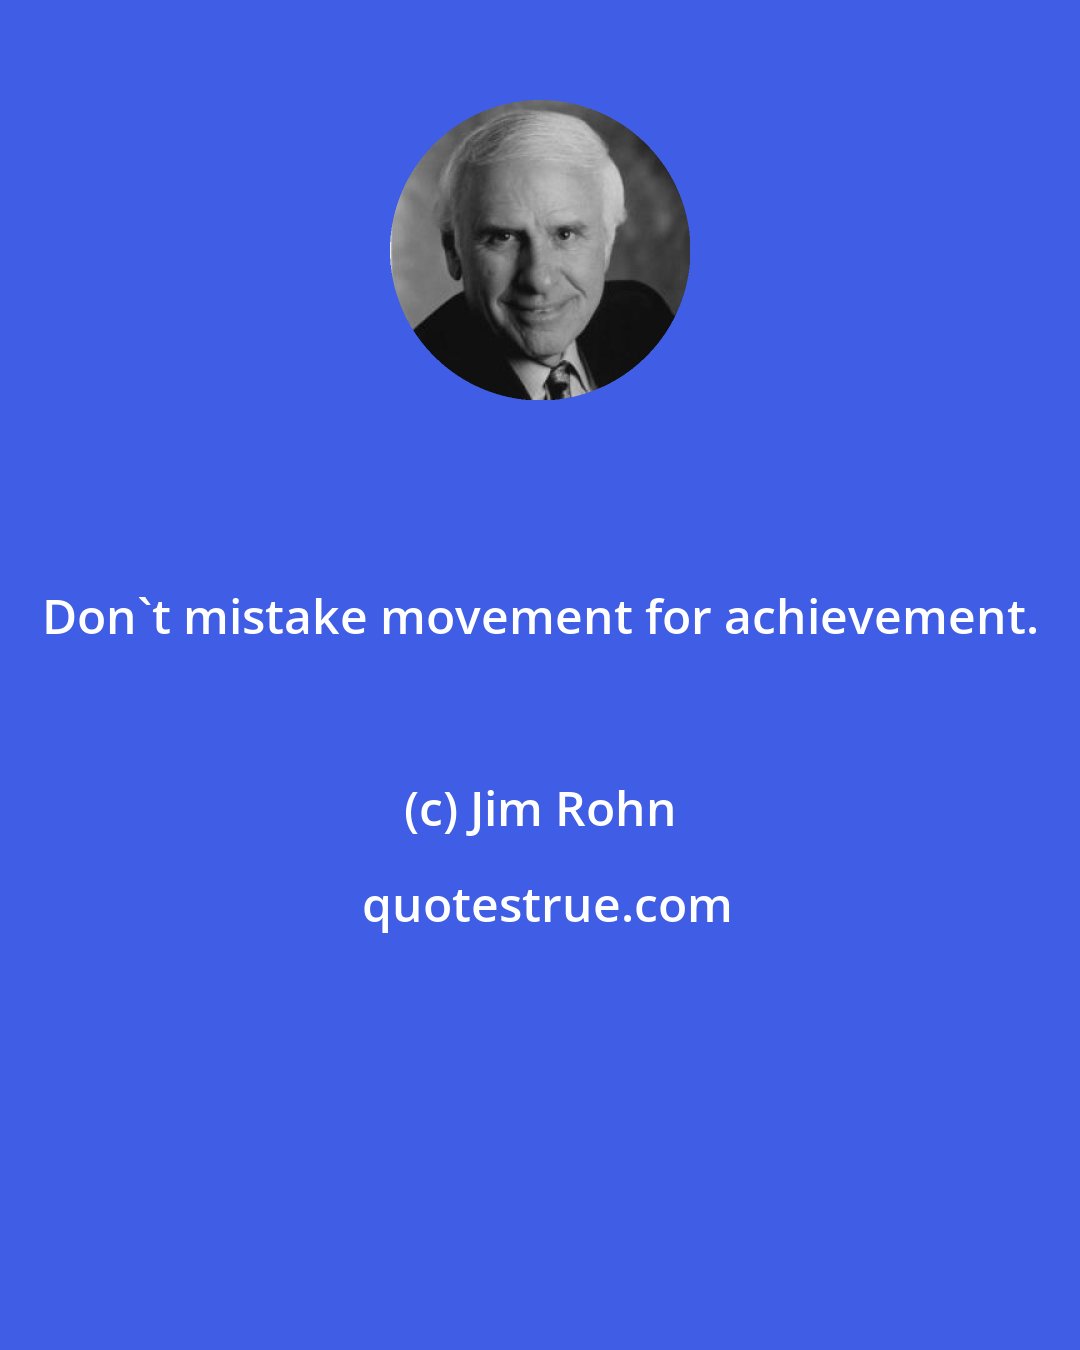 Jim Rohn: Don't mistake movement for achievement.